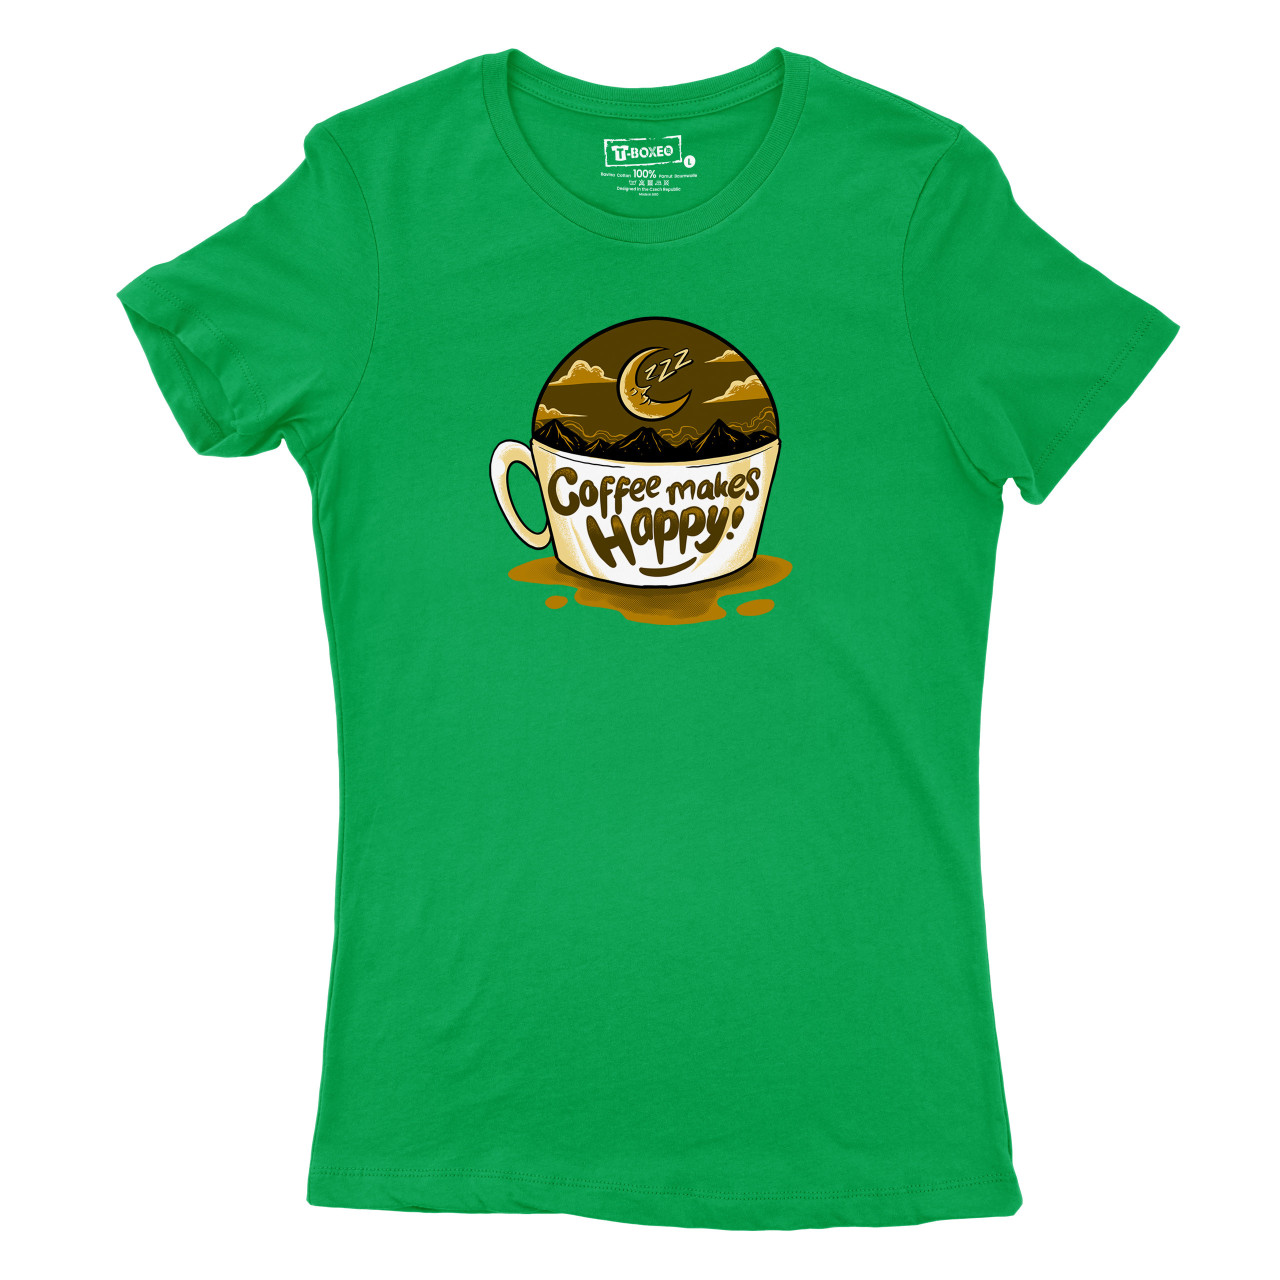 Dámské tričko s potiskem “Coffee Makes Happy”